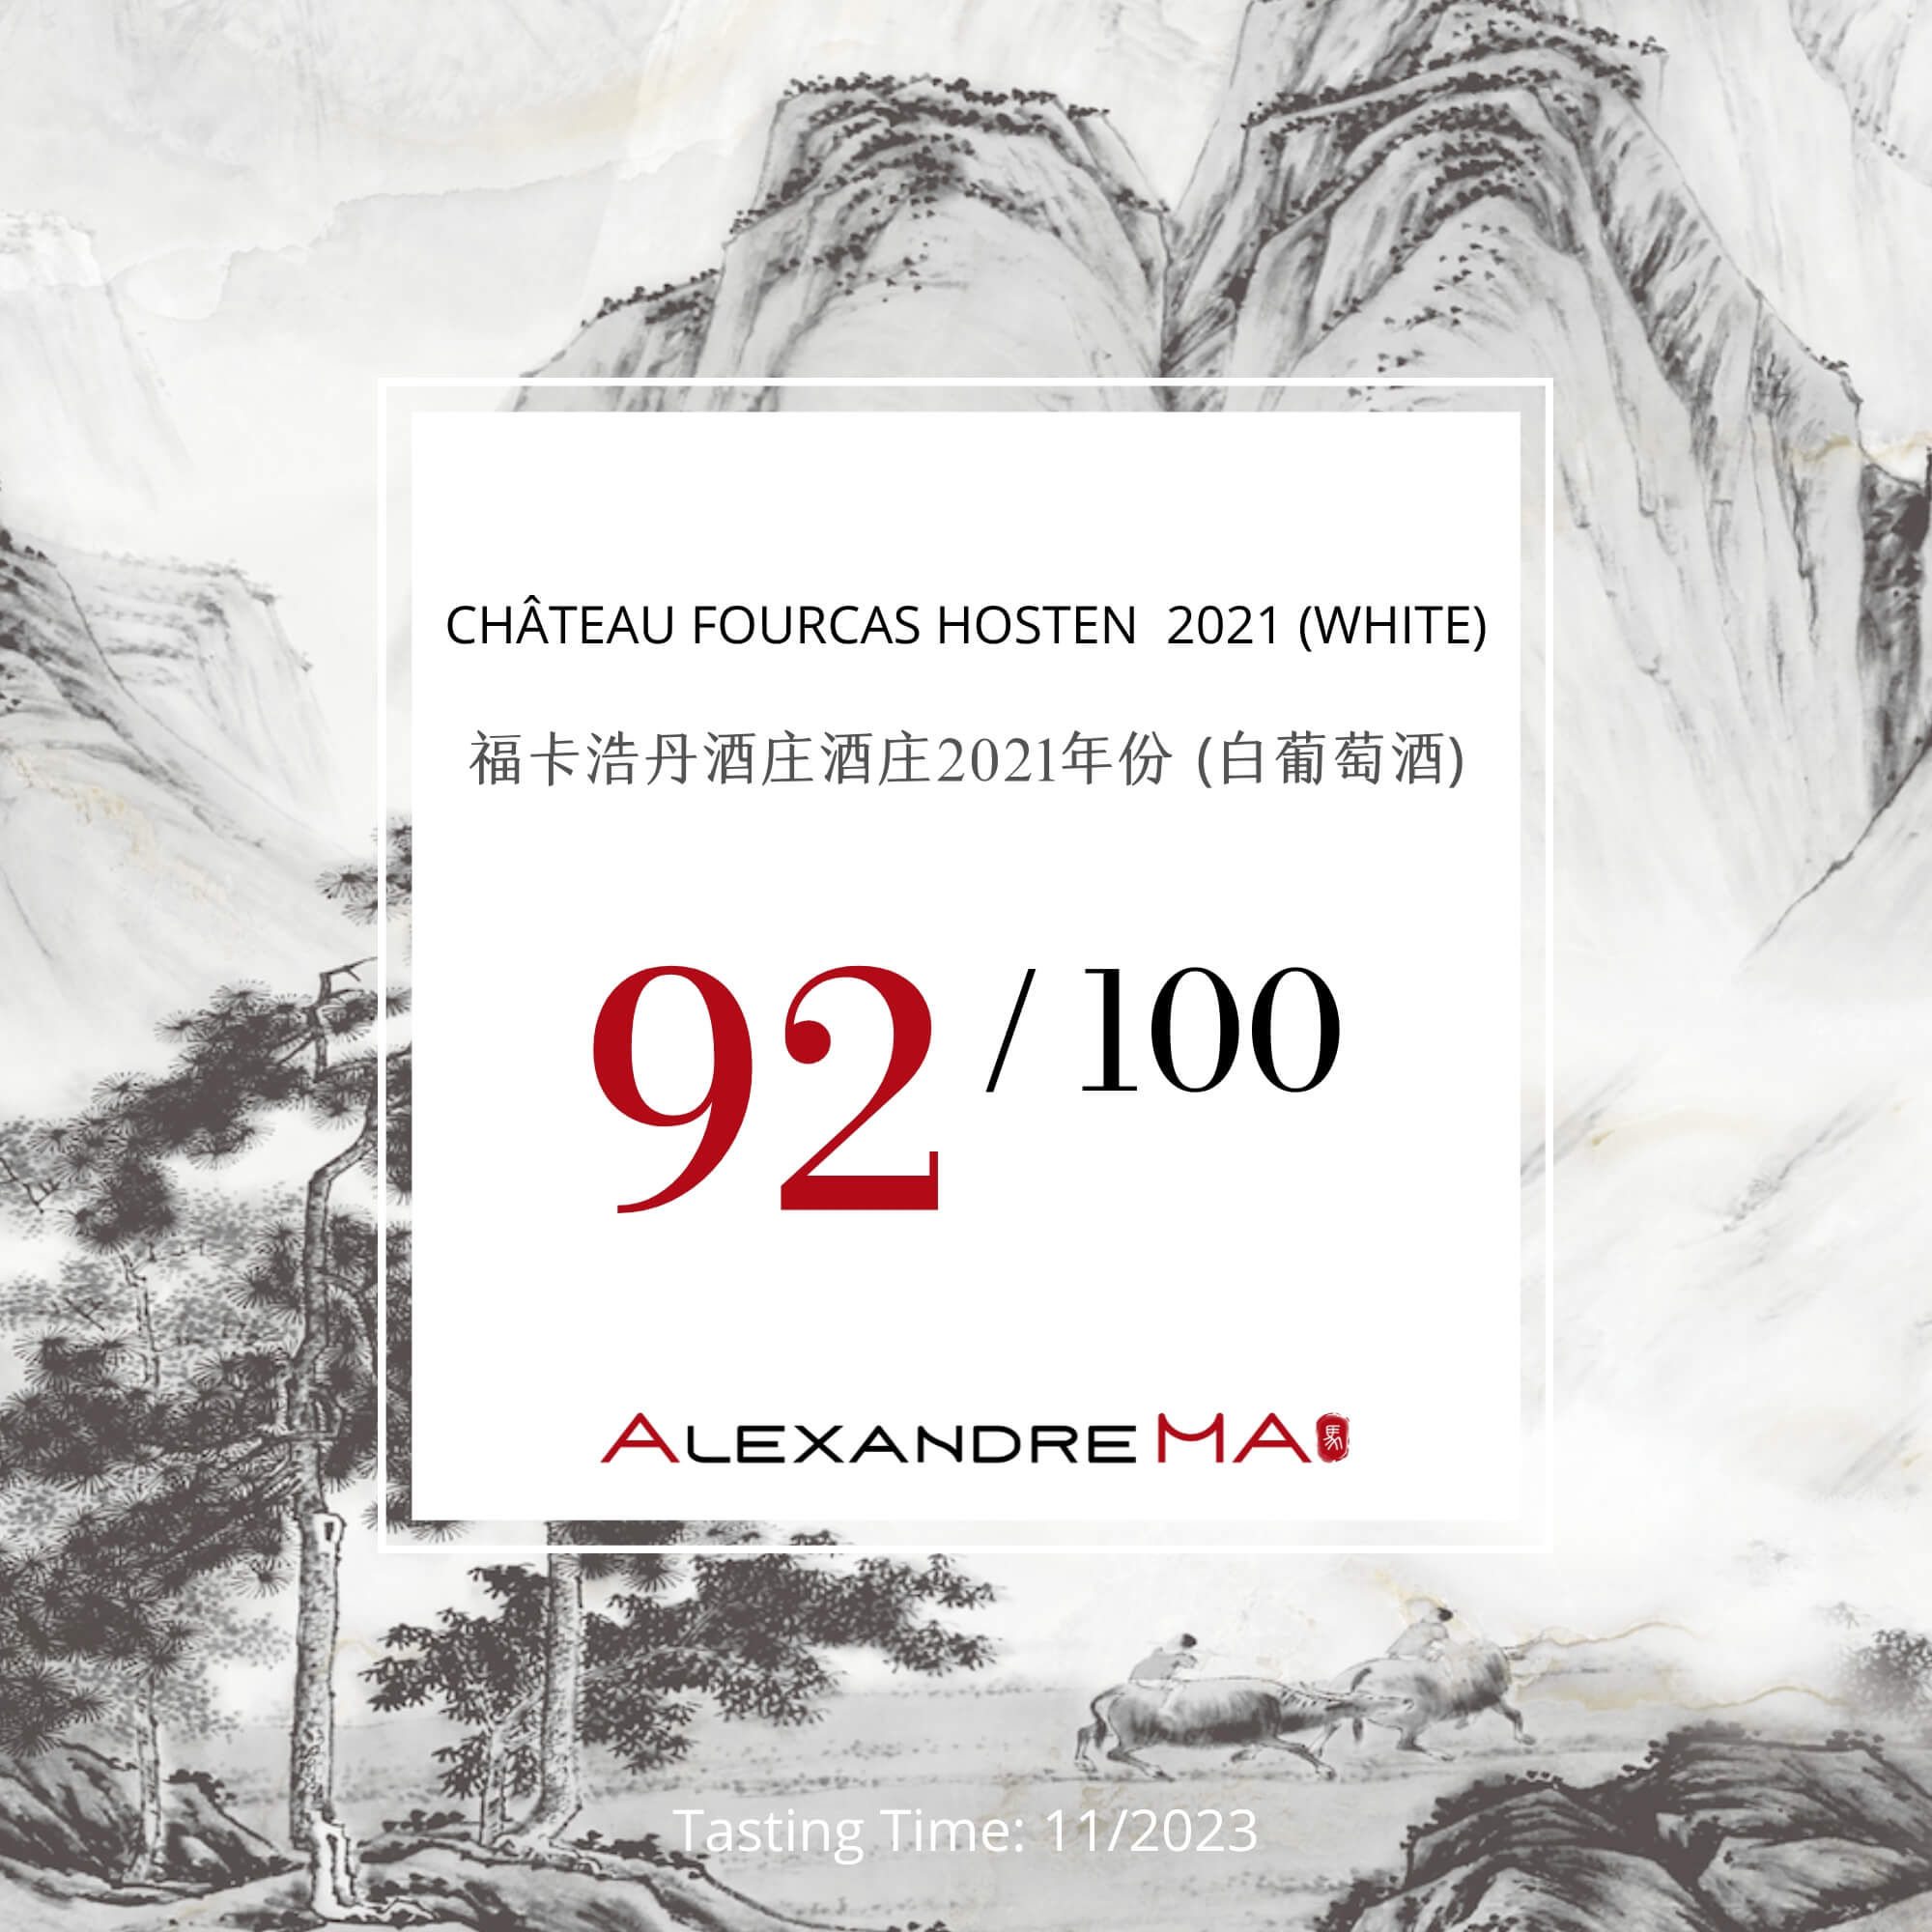 Château Fourcas Hosten 2021-White - Alexandre MA